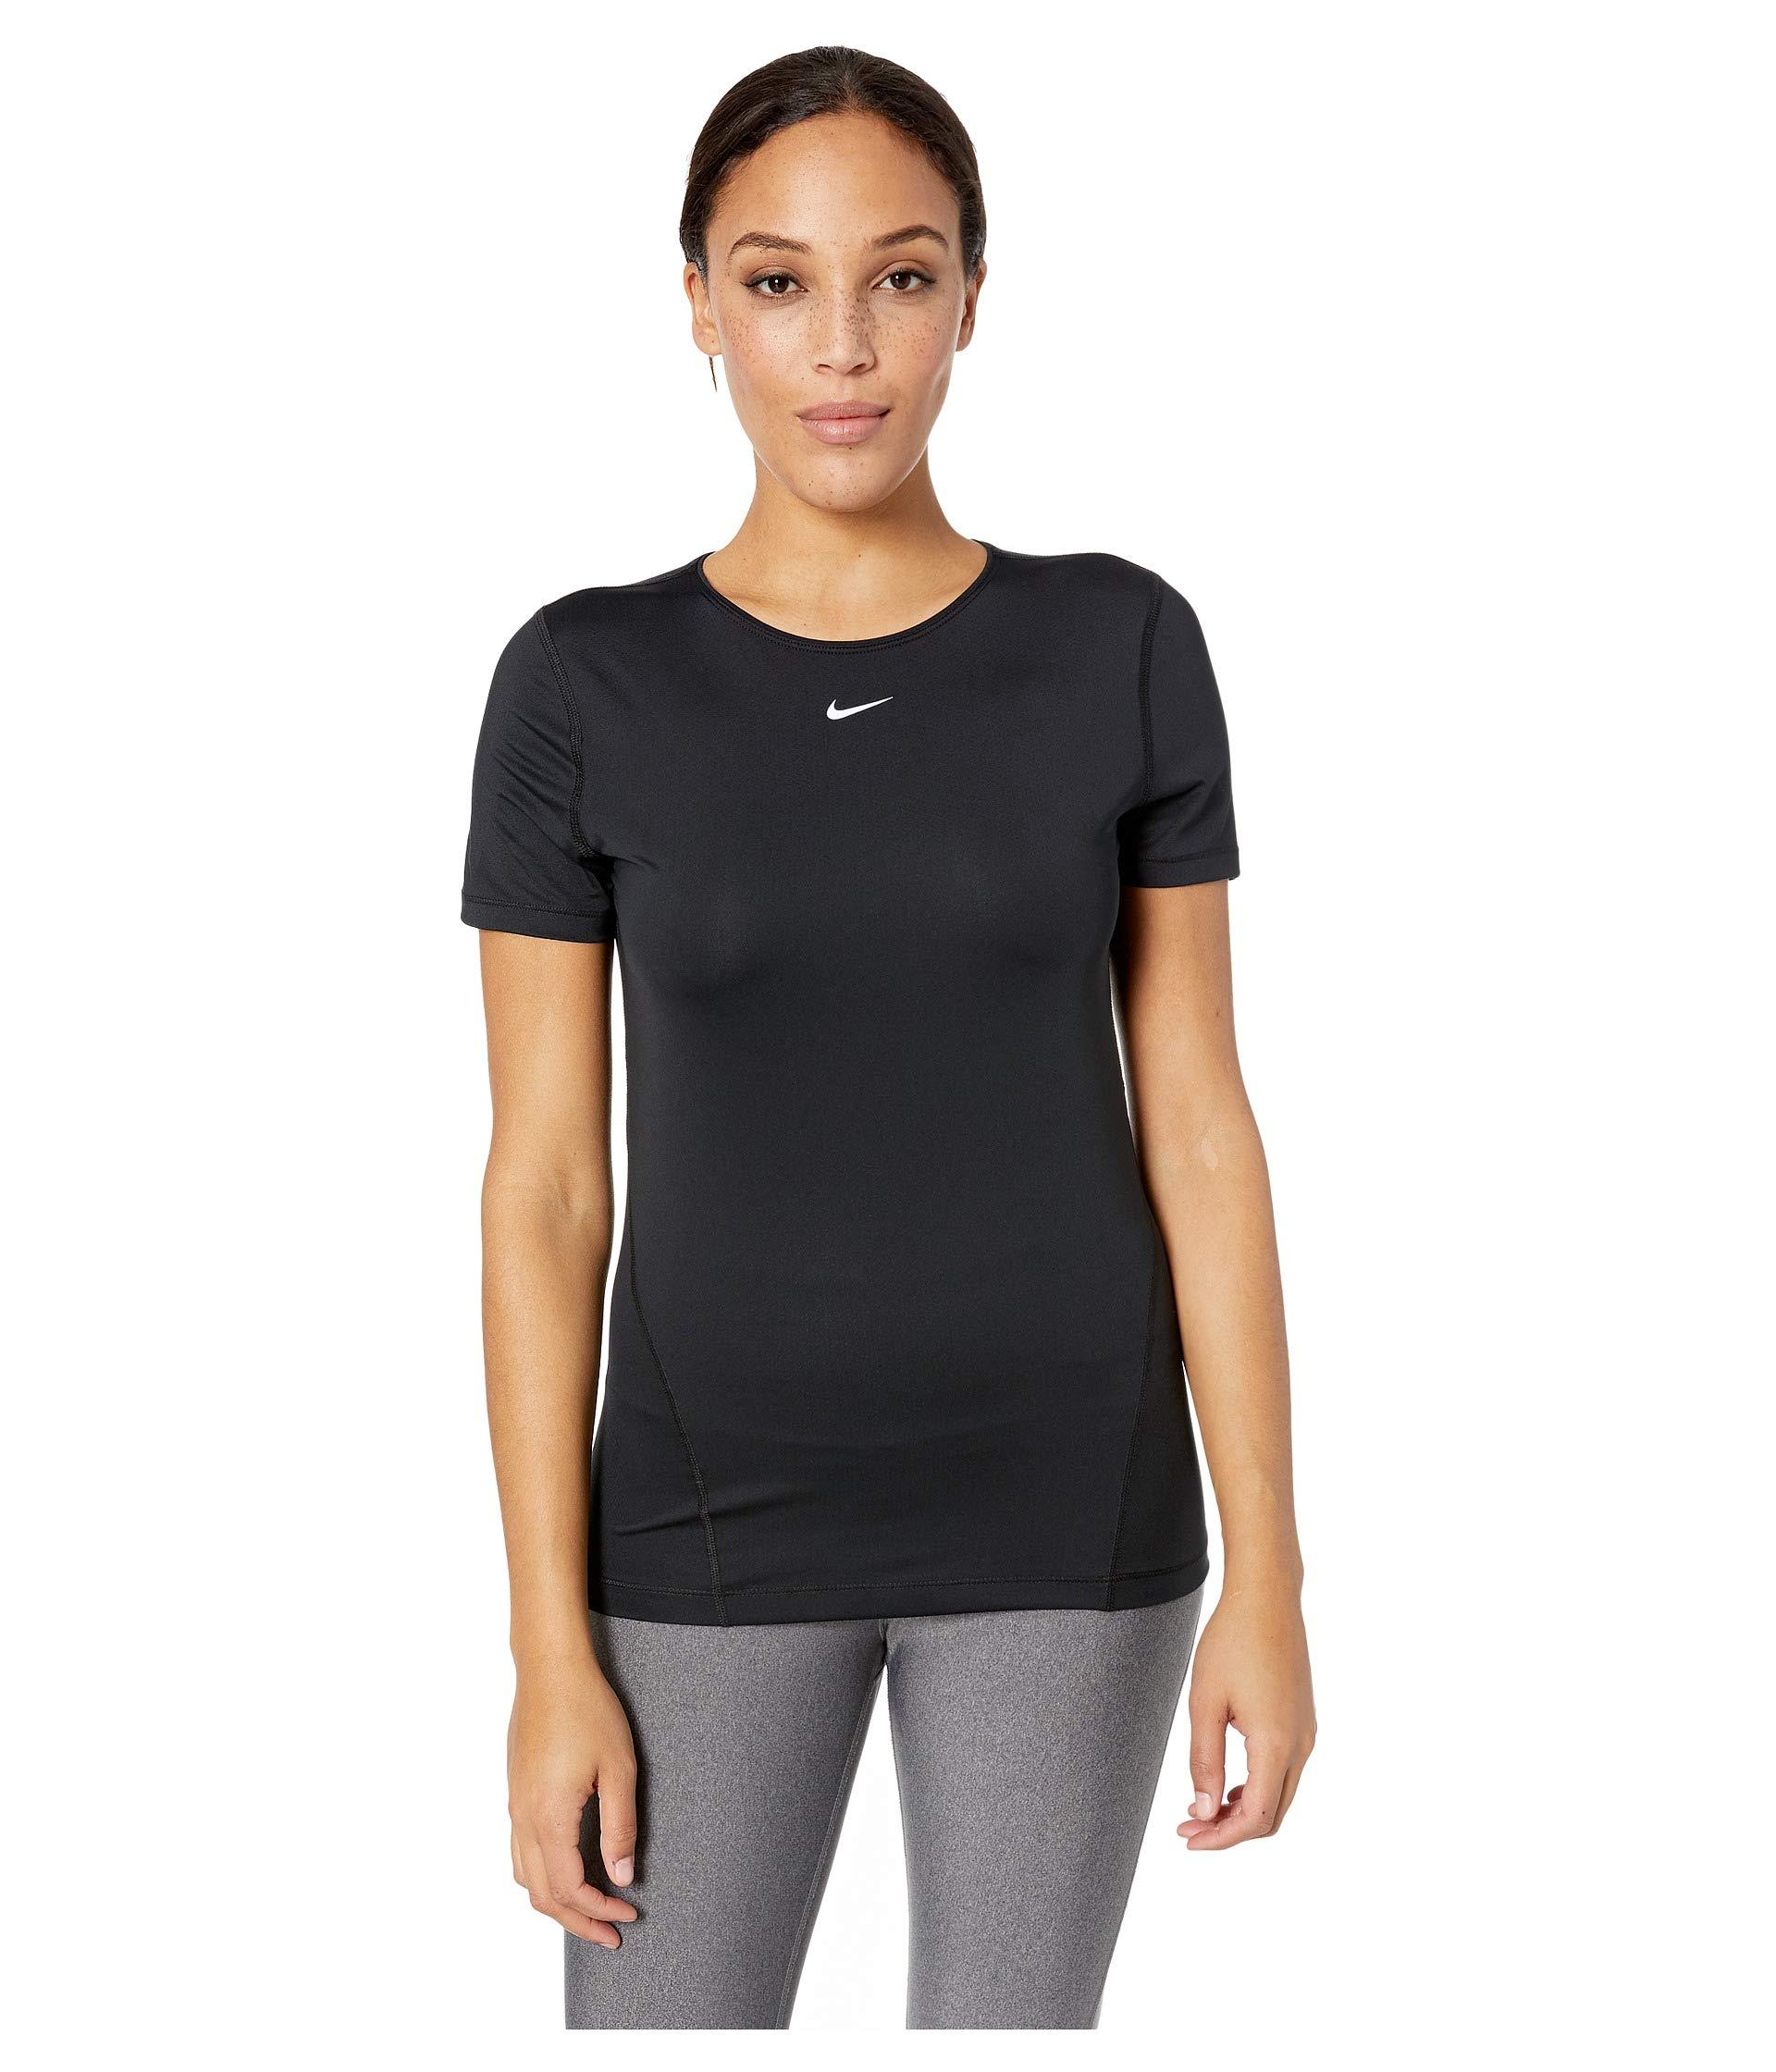 Nike Pro Short-sleeve Mesh Training Top in Black - Lyst